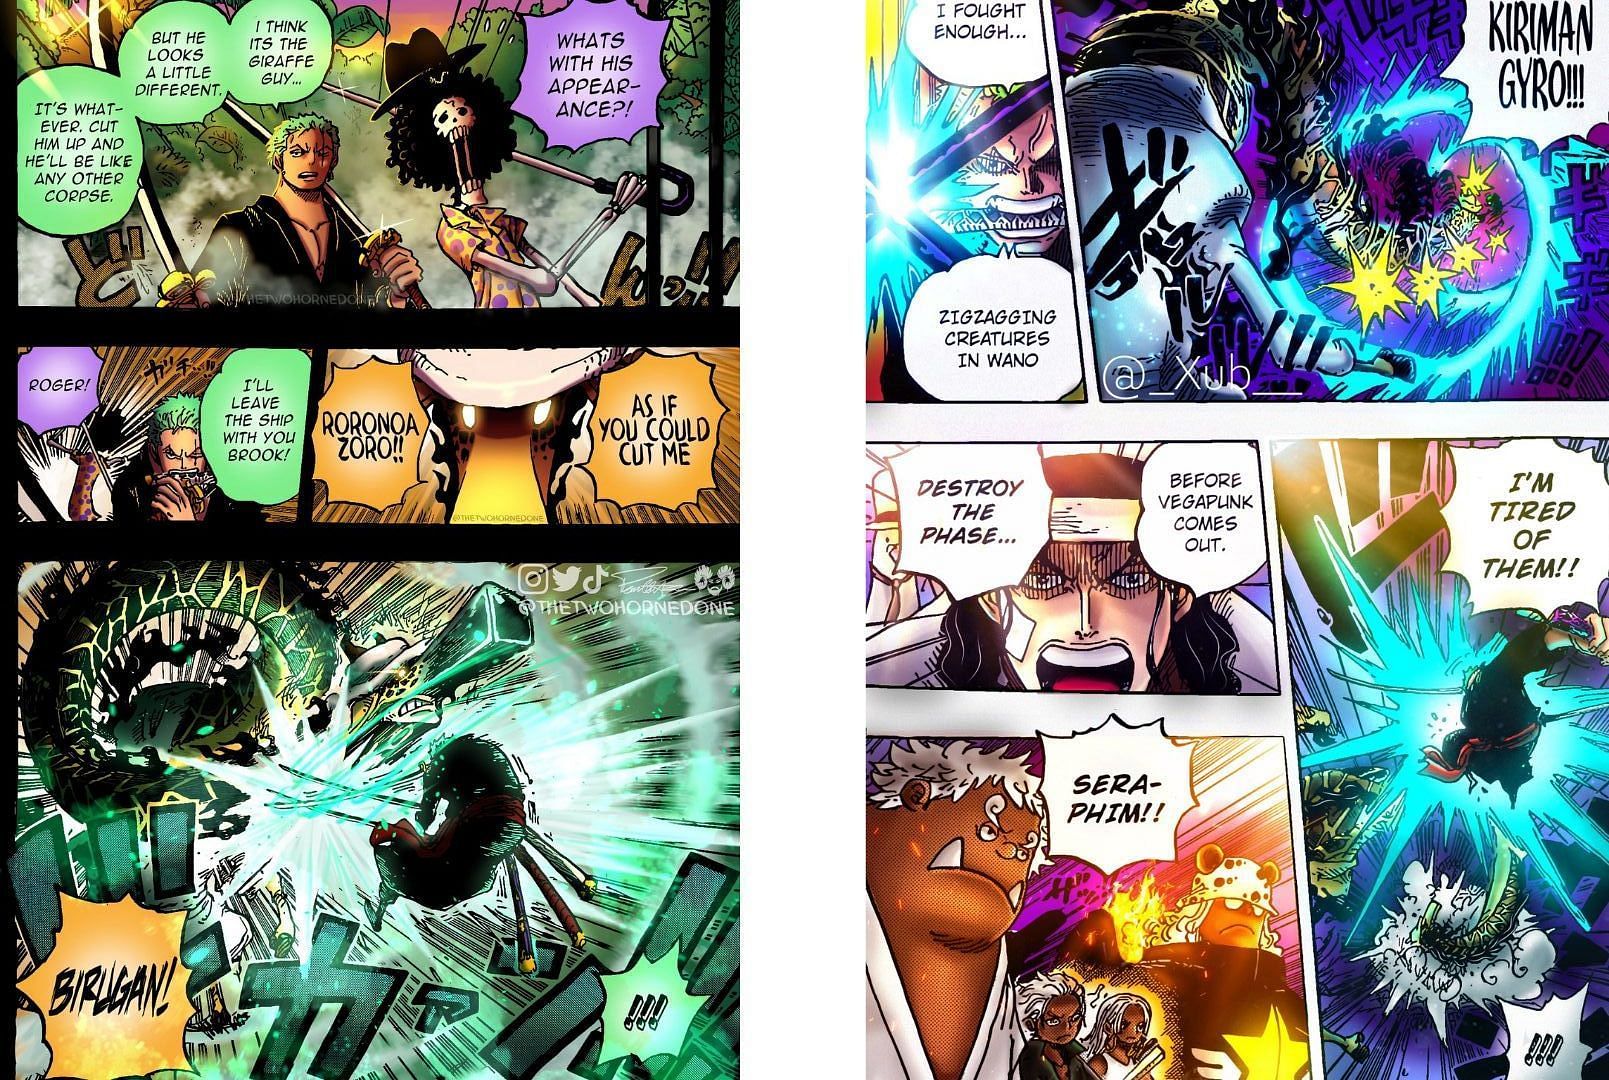 Zoro fighting Kaku in One Piece chapter 1072 (Image via Eiichiro Oda